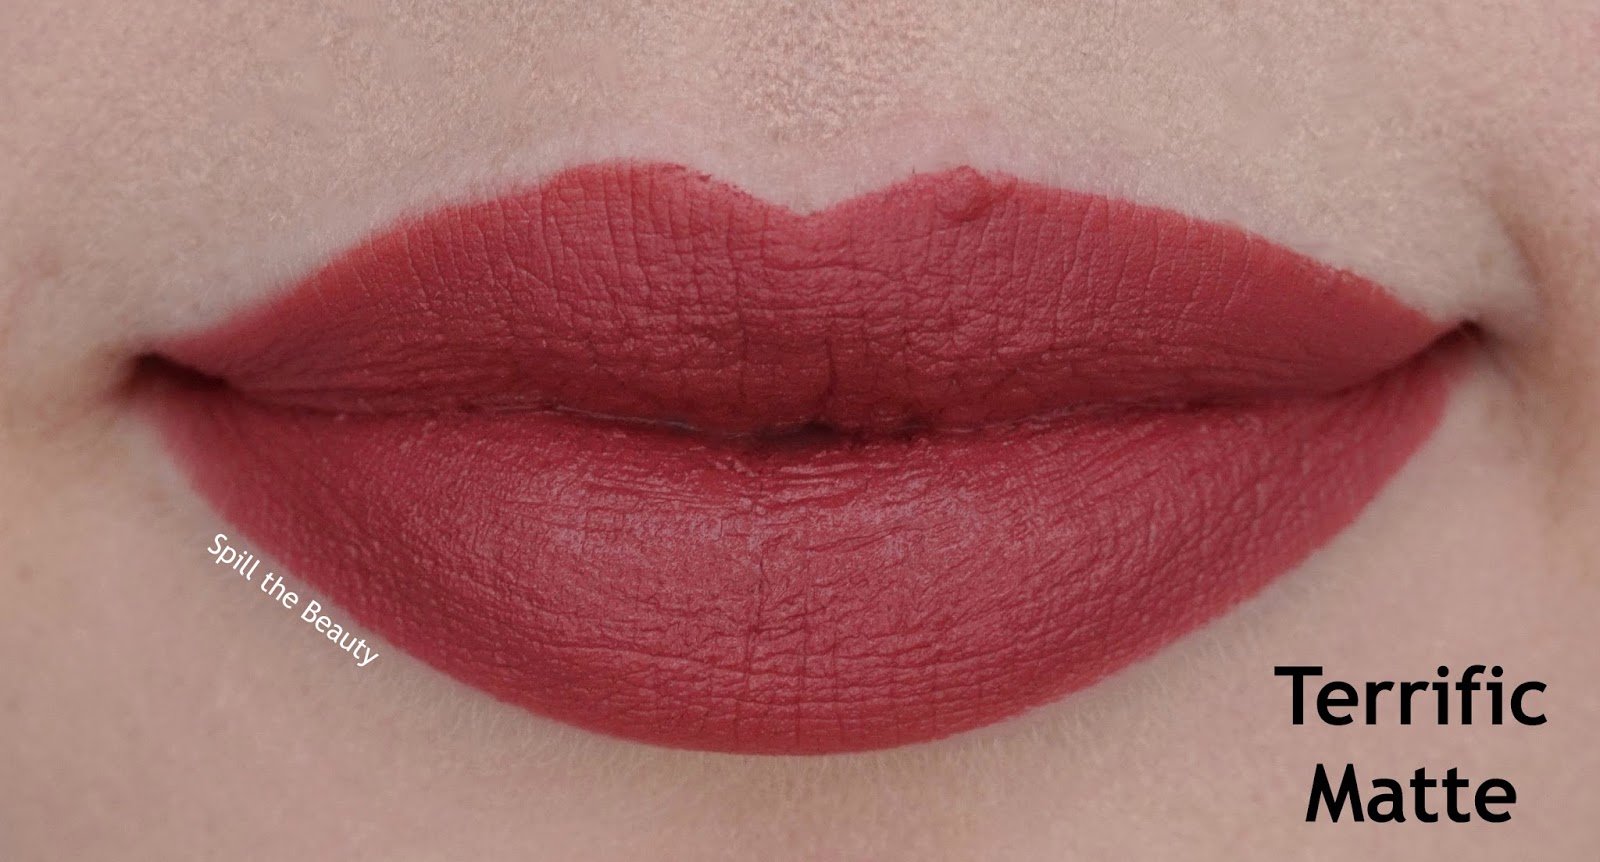 dior lipstick 745